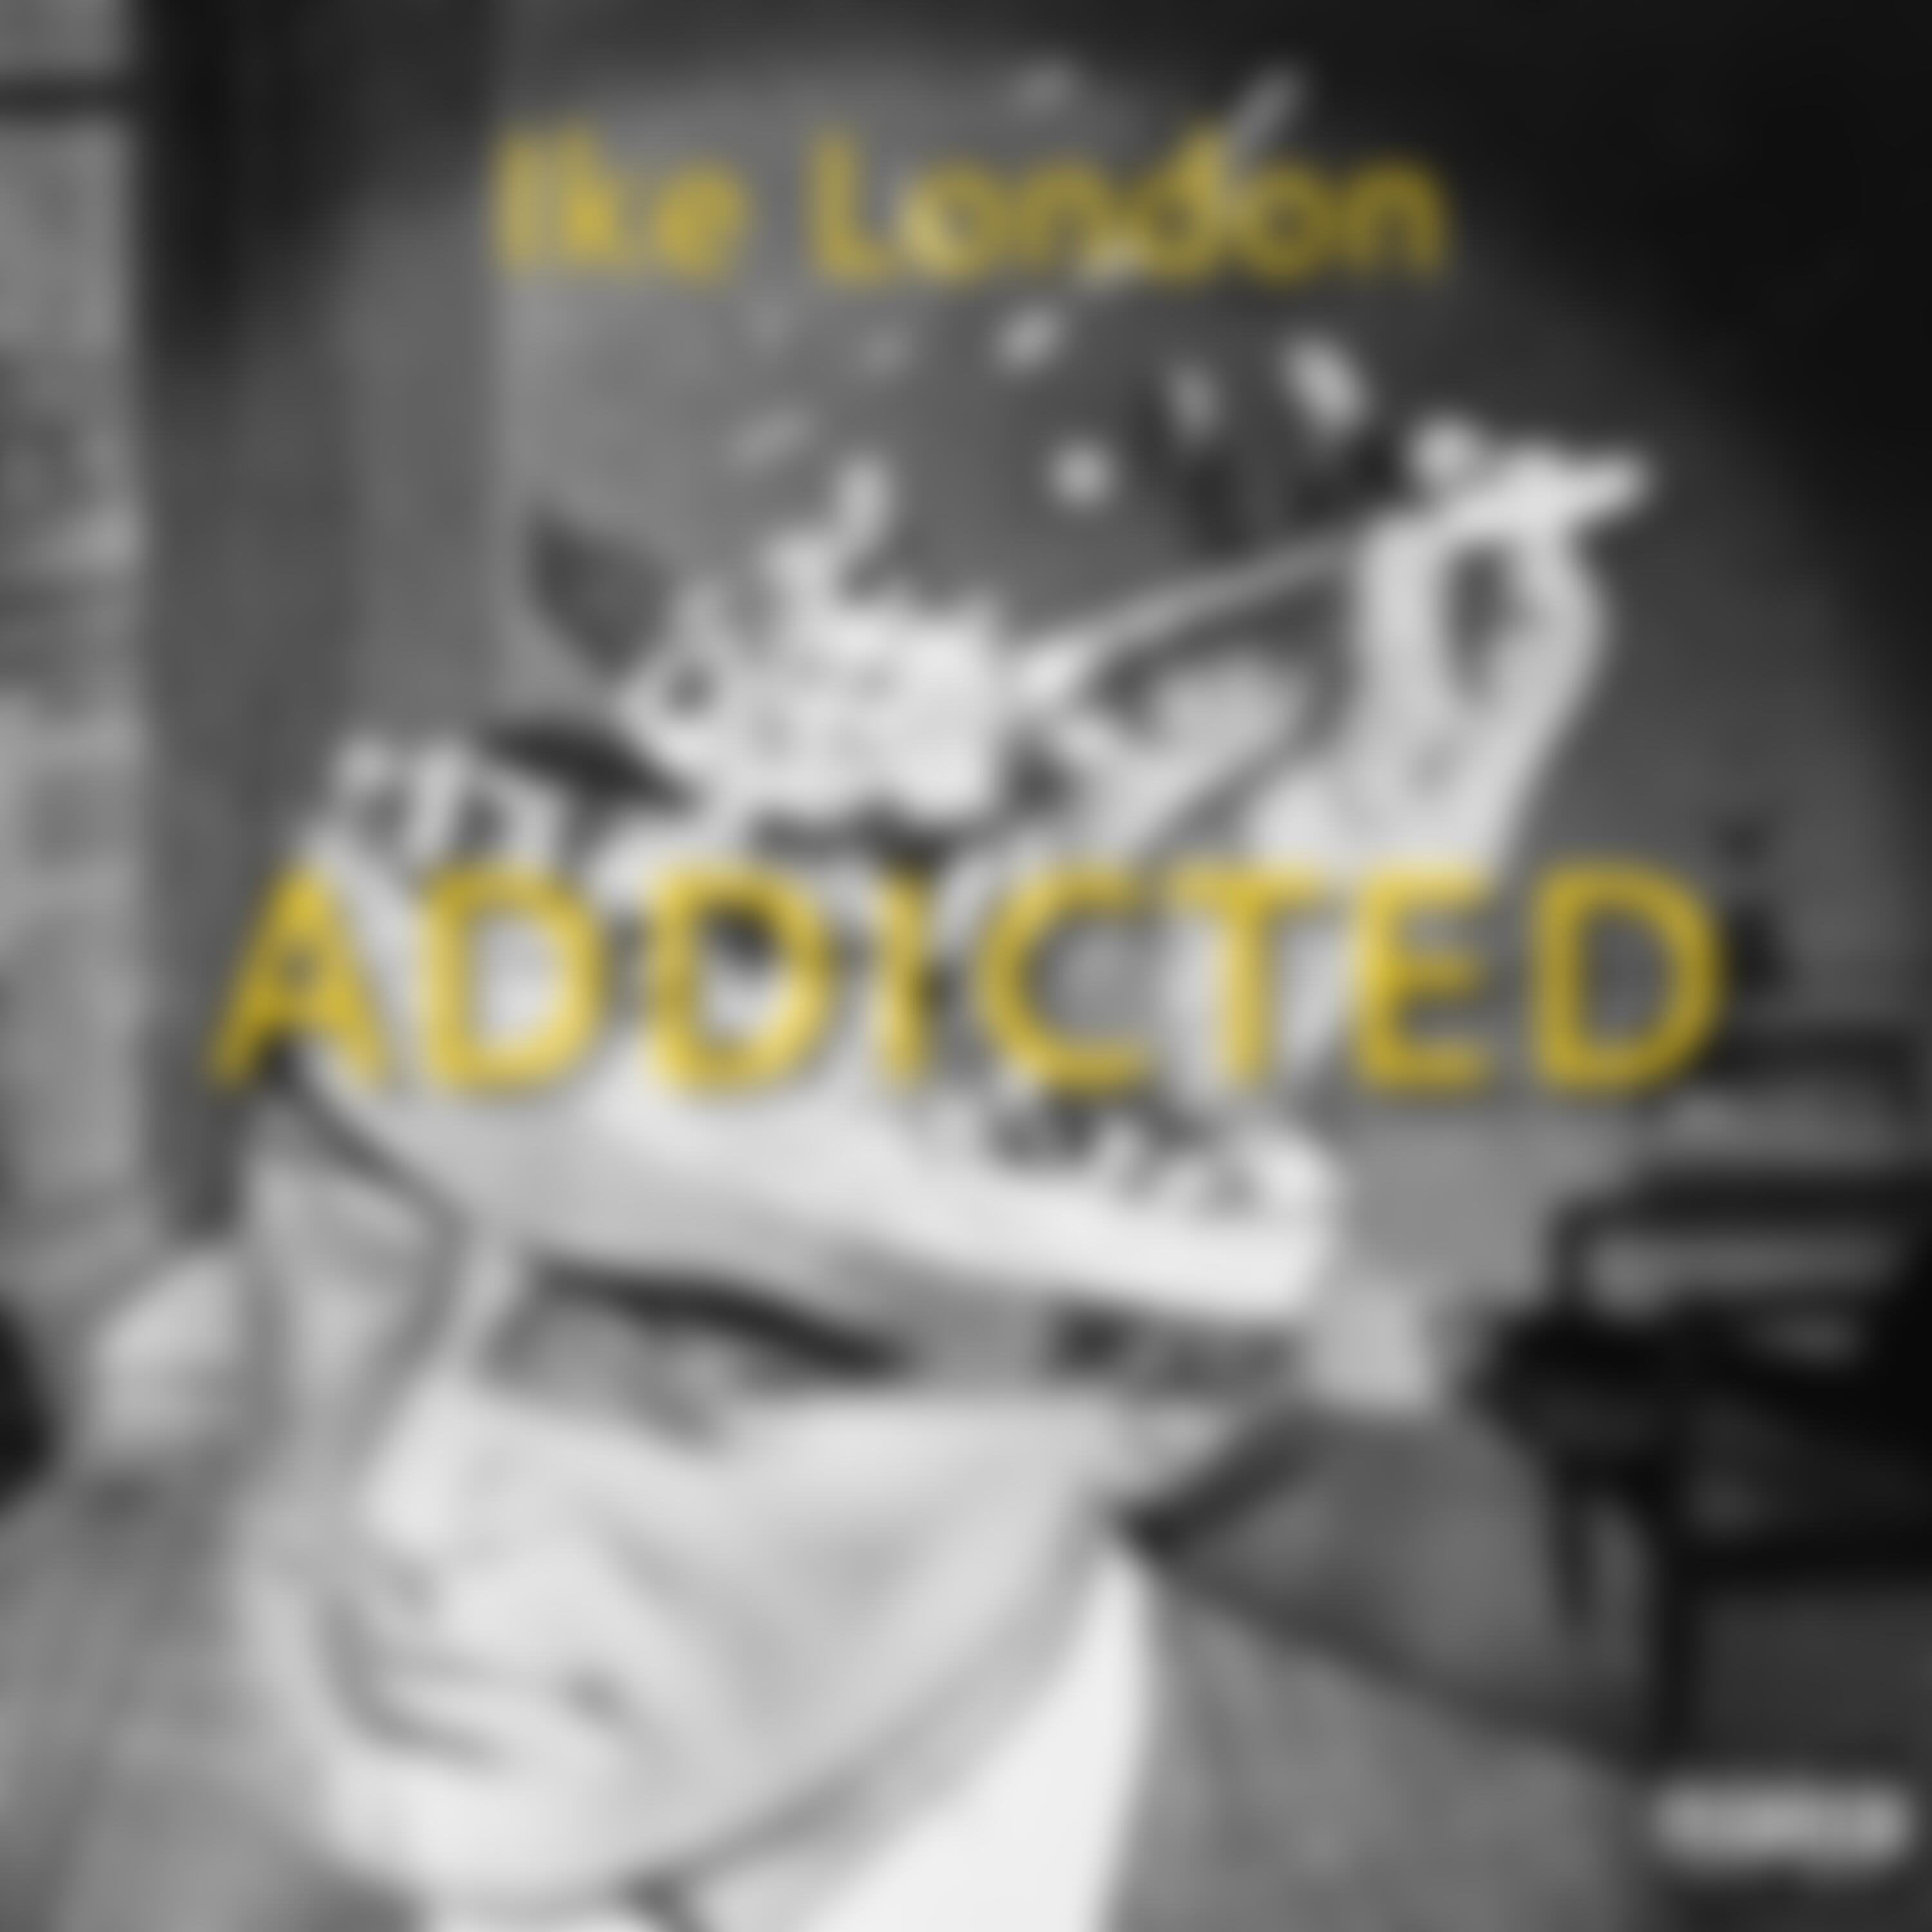 Ike London - Addicted